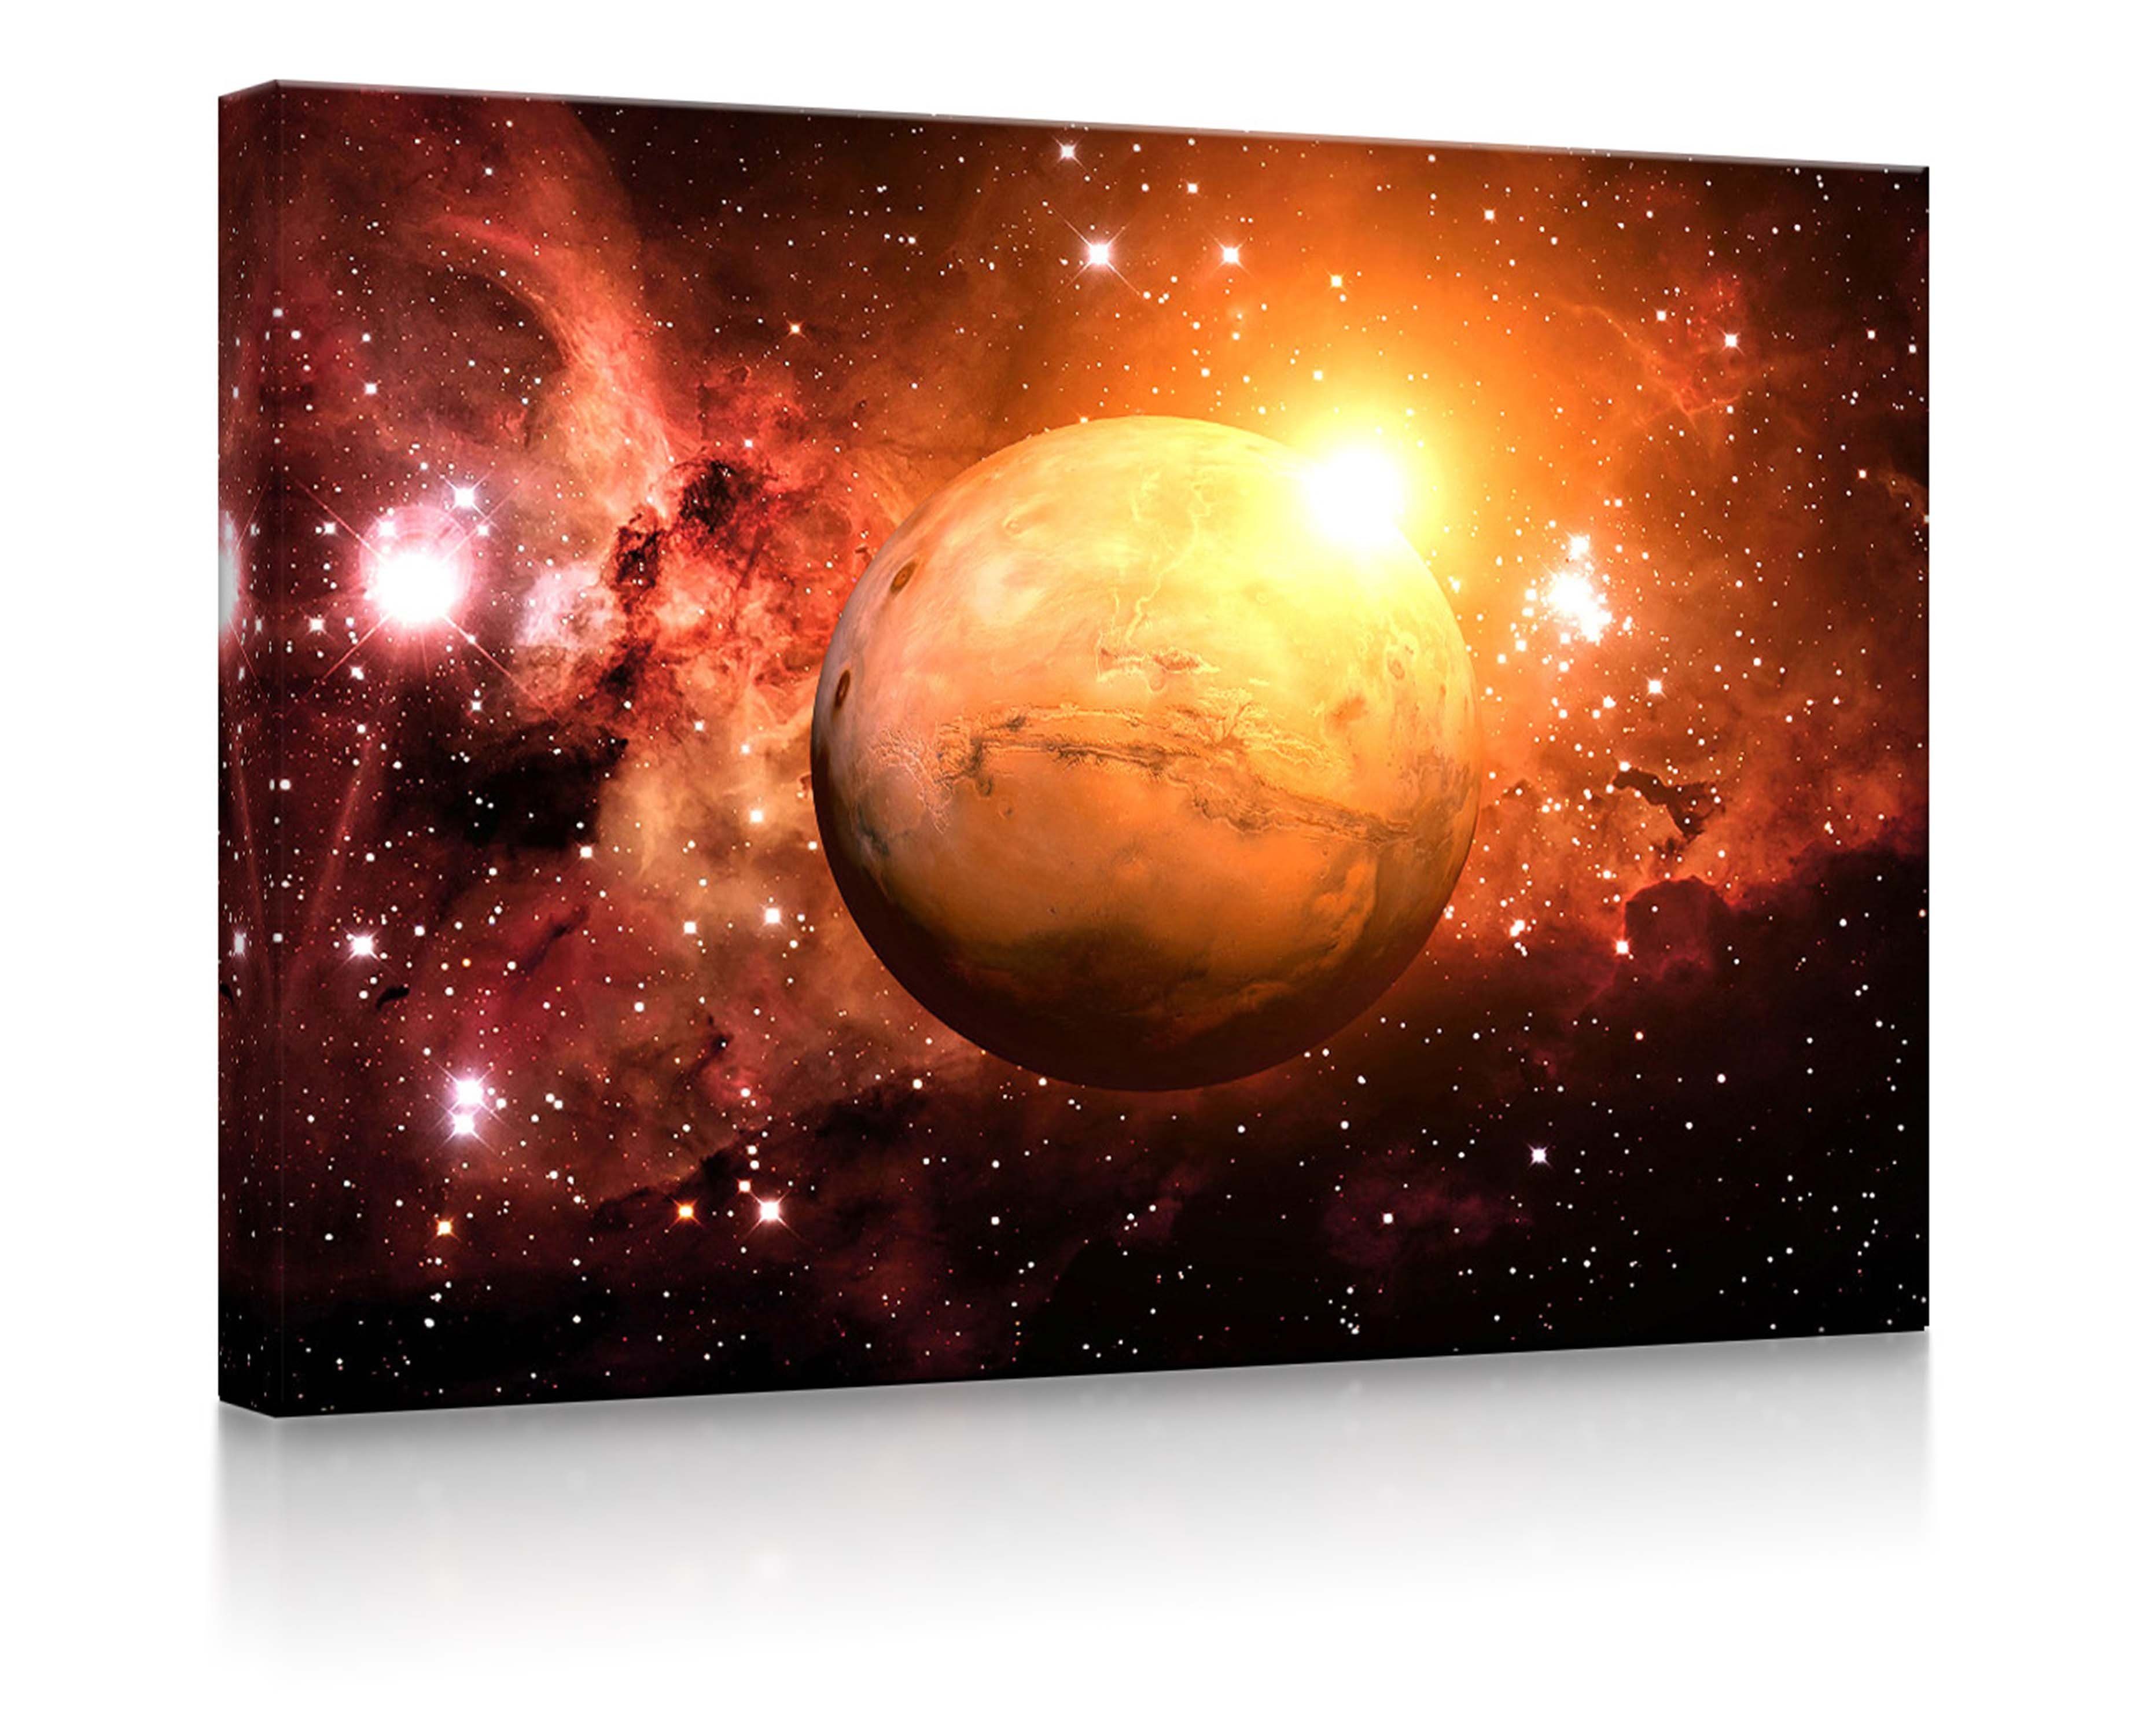 lightbox-multicolor LED-Bild Planet Mars im Universum fully lighted / 60x40cm, Leuchtbild mit Fernbedienung